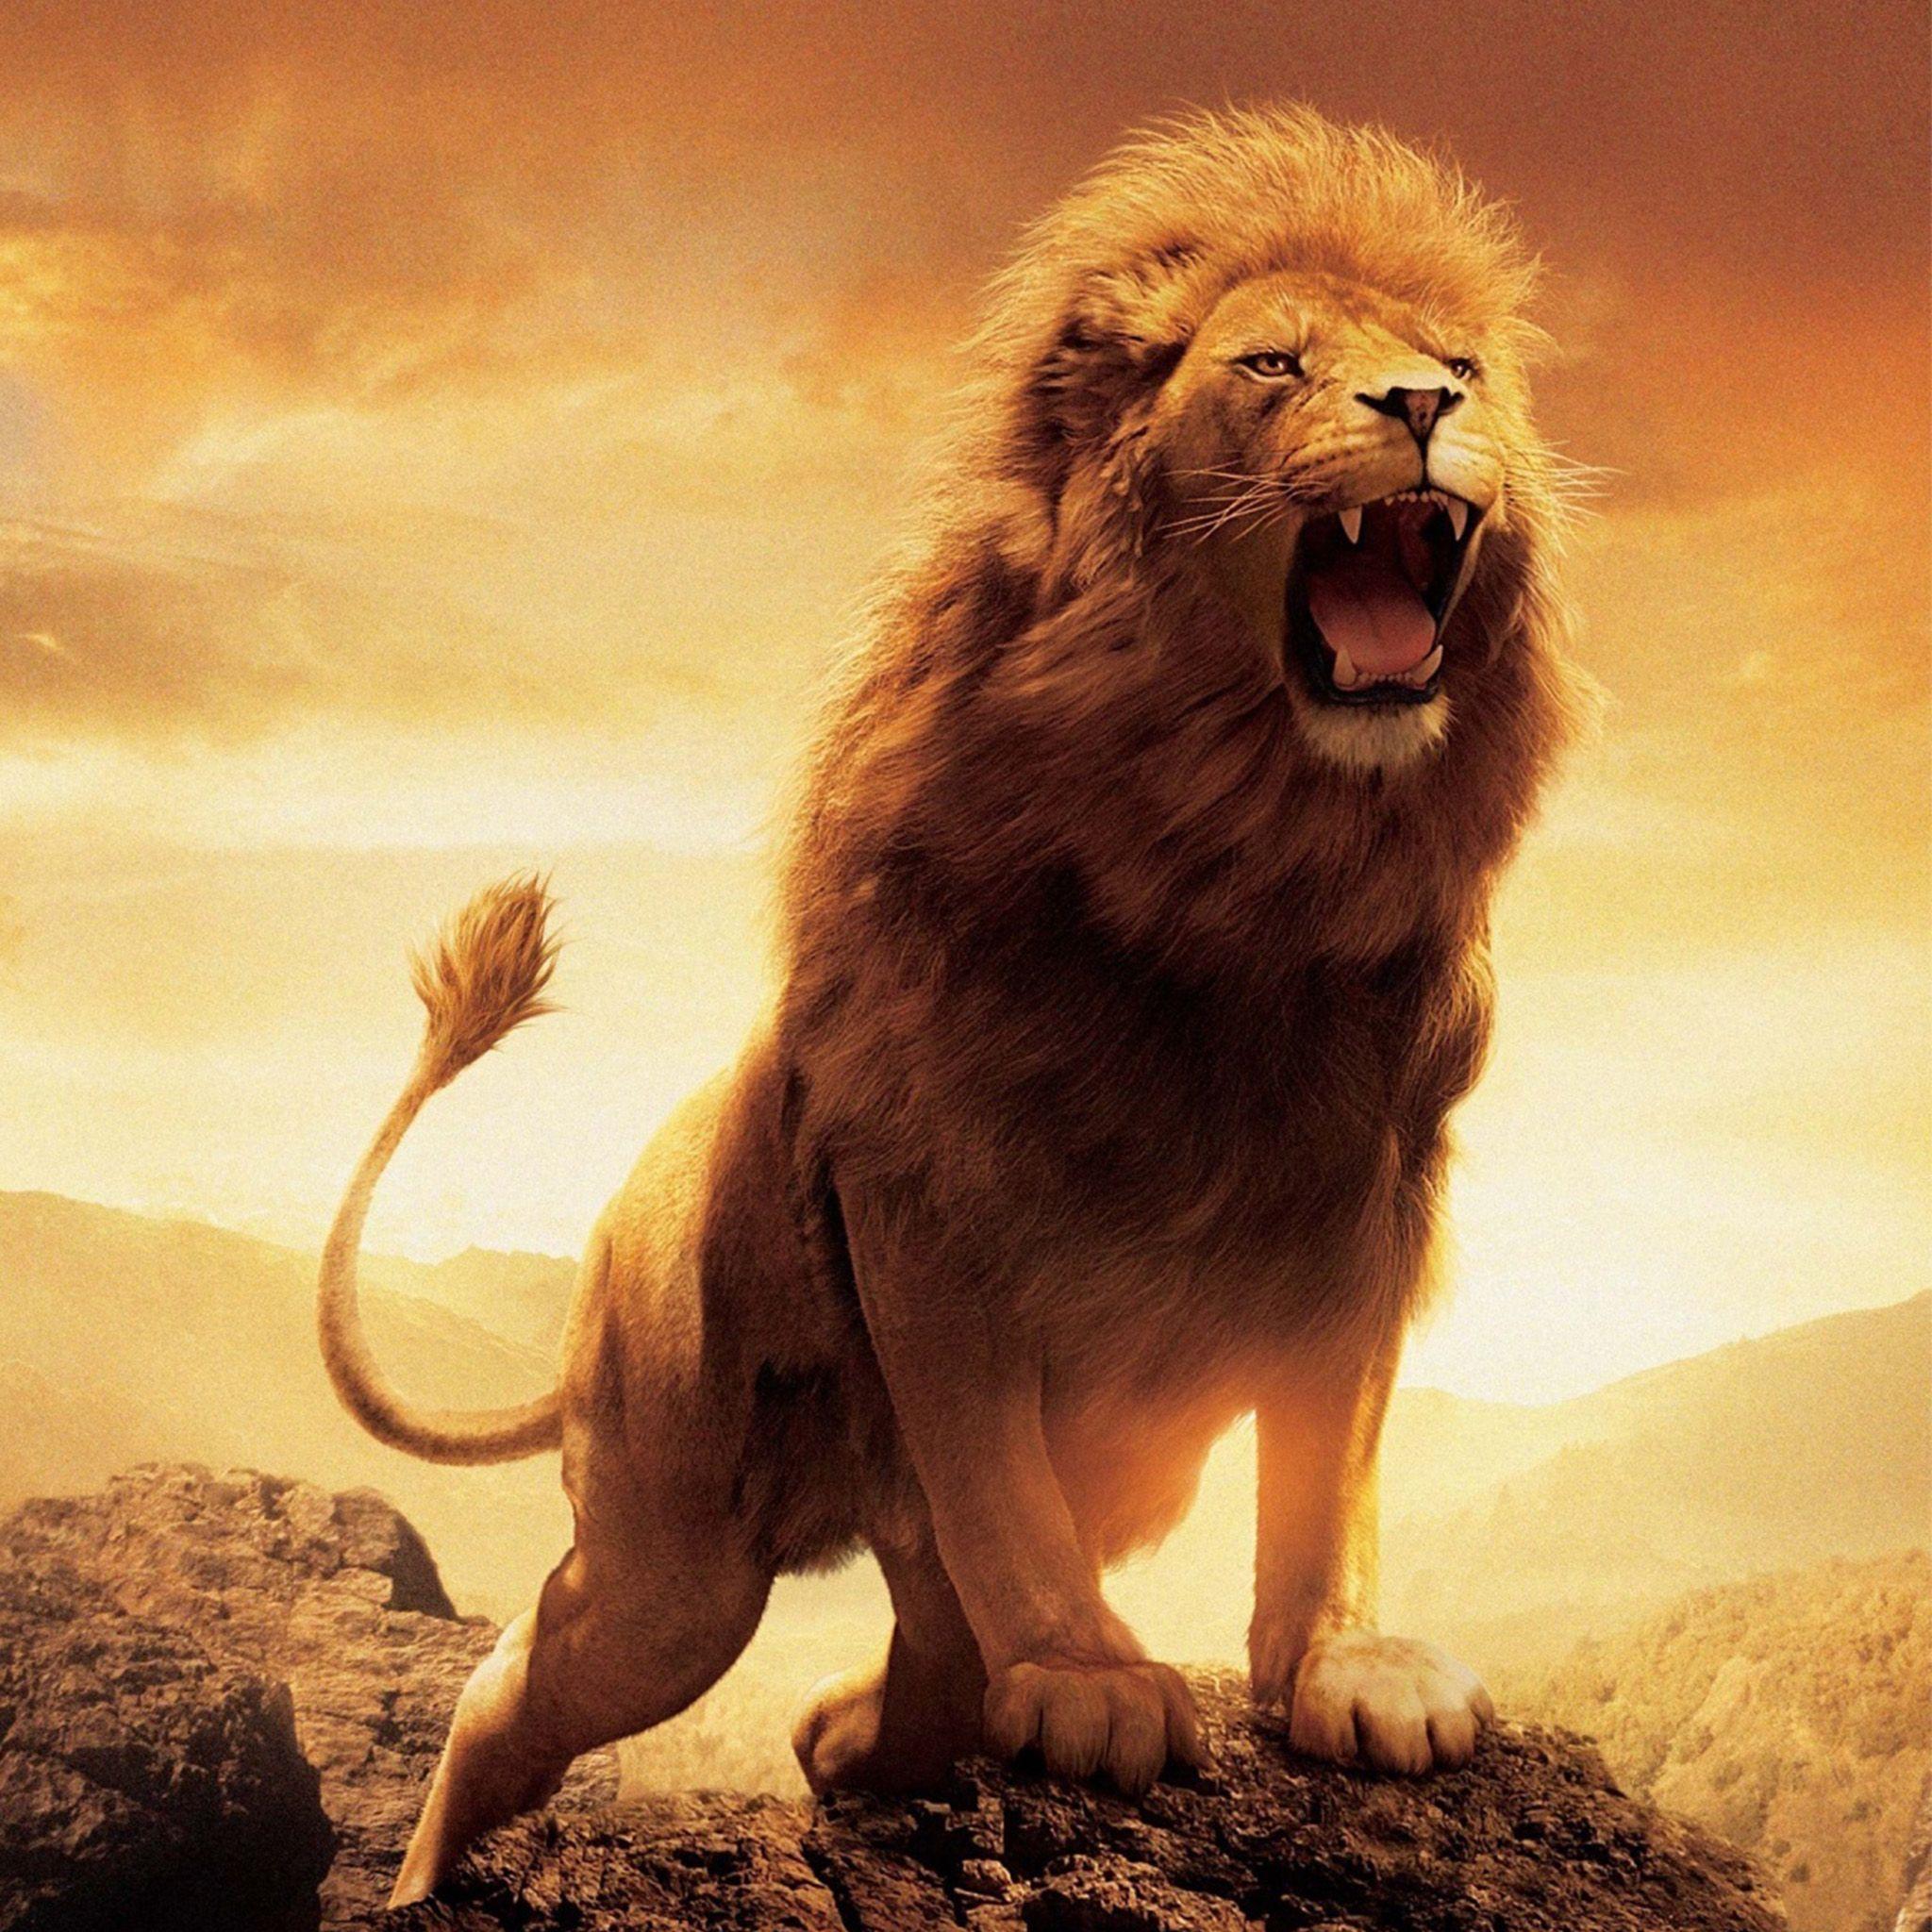 roaring lion hd wallpaper download